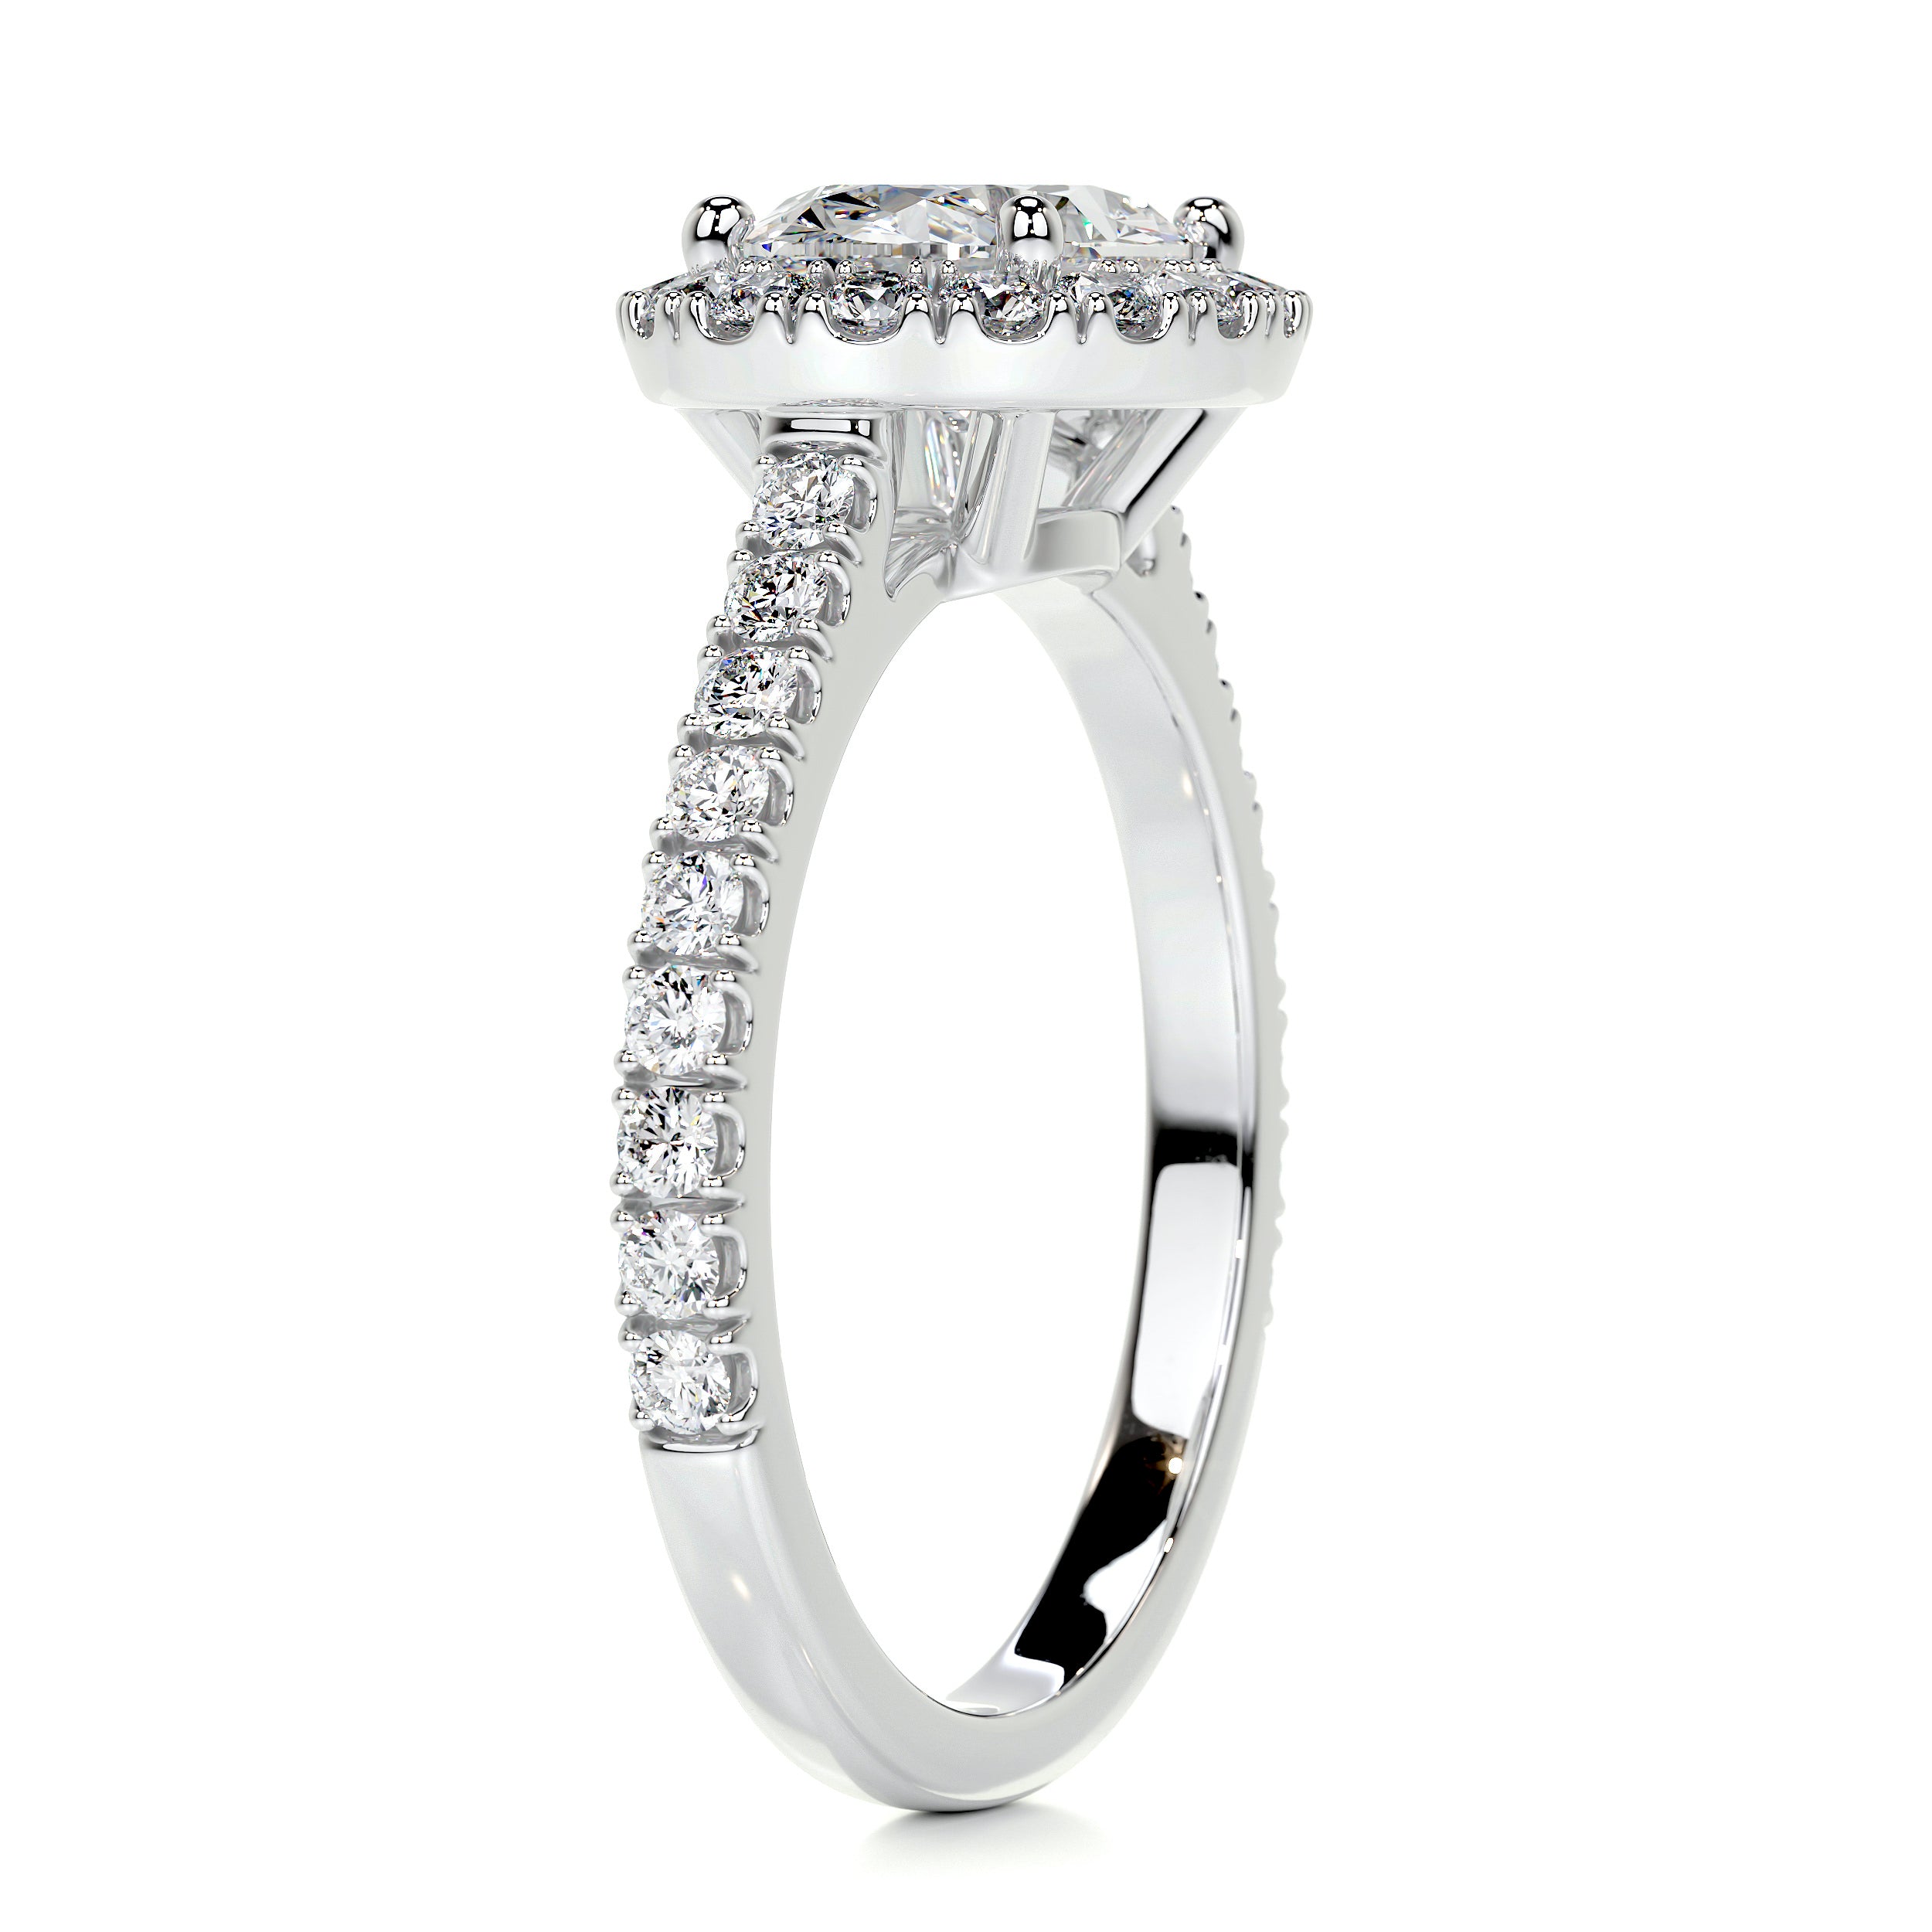 Alessandra Diamond Engagement Ring   (1.30 Carat) -14K White Gold